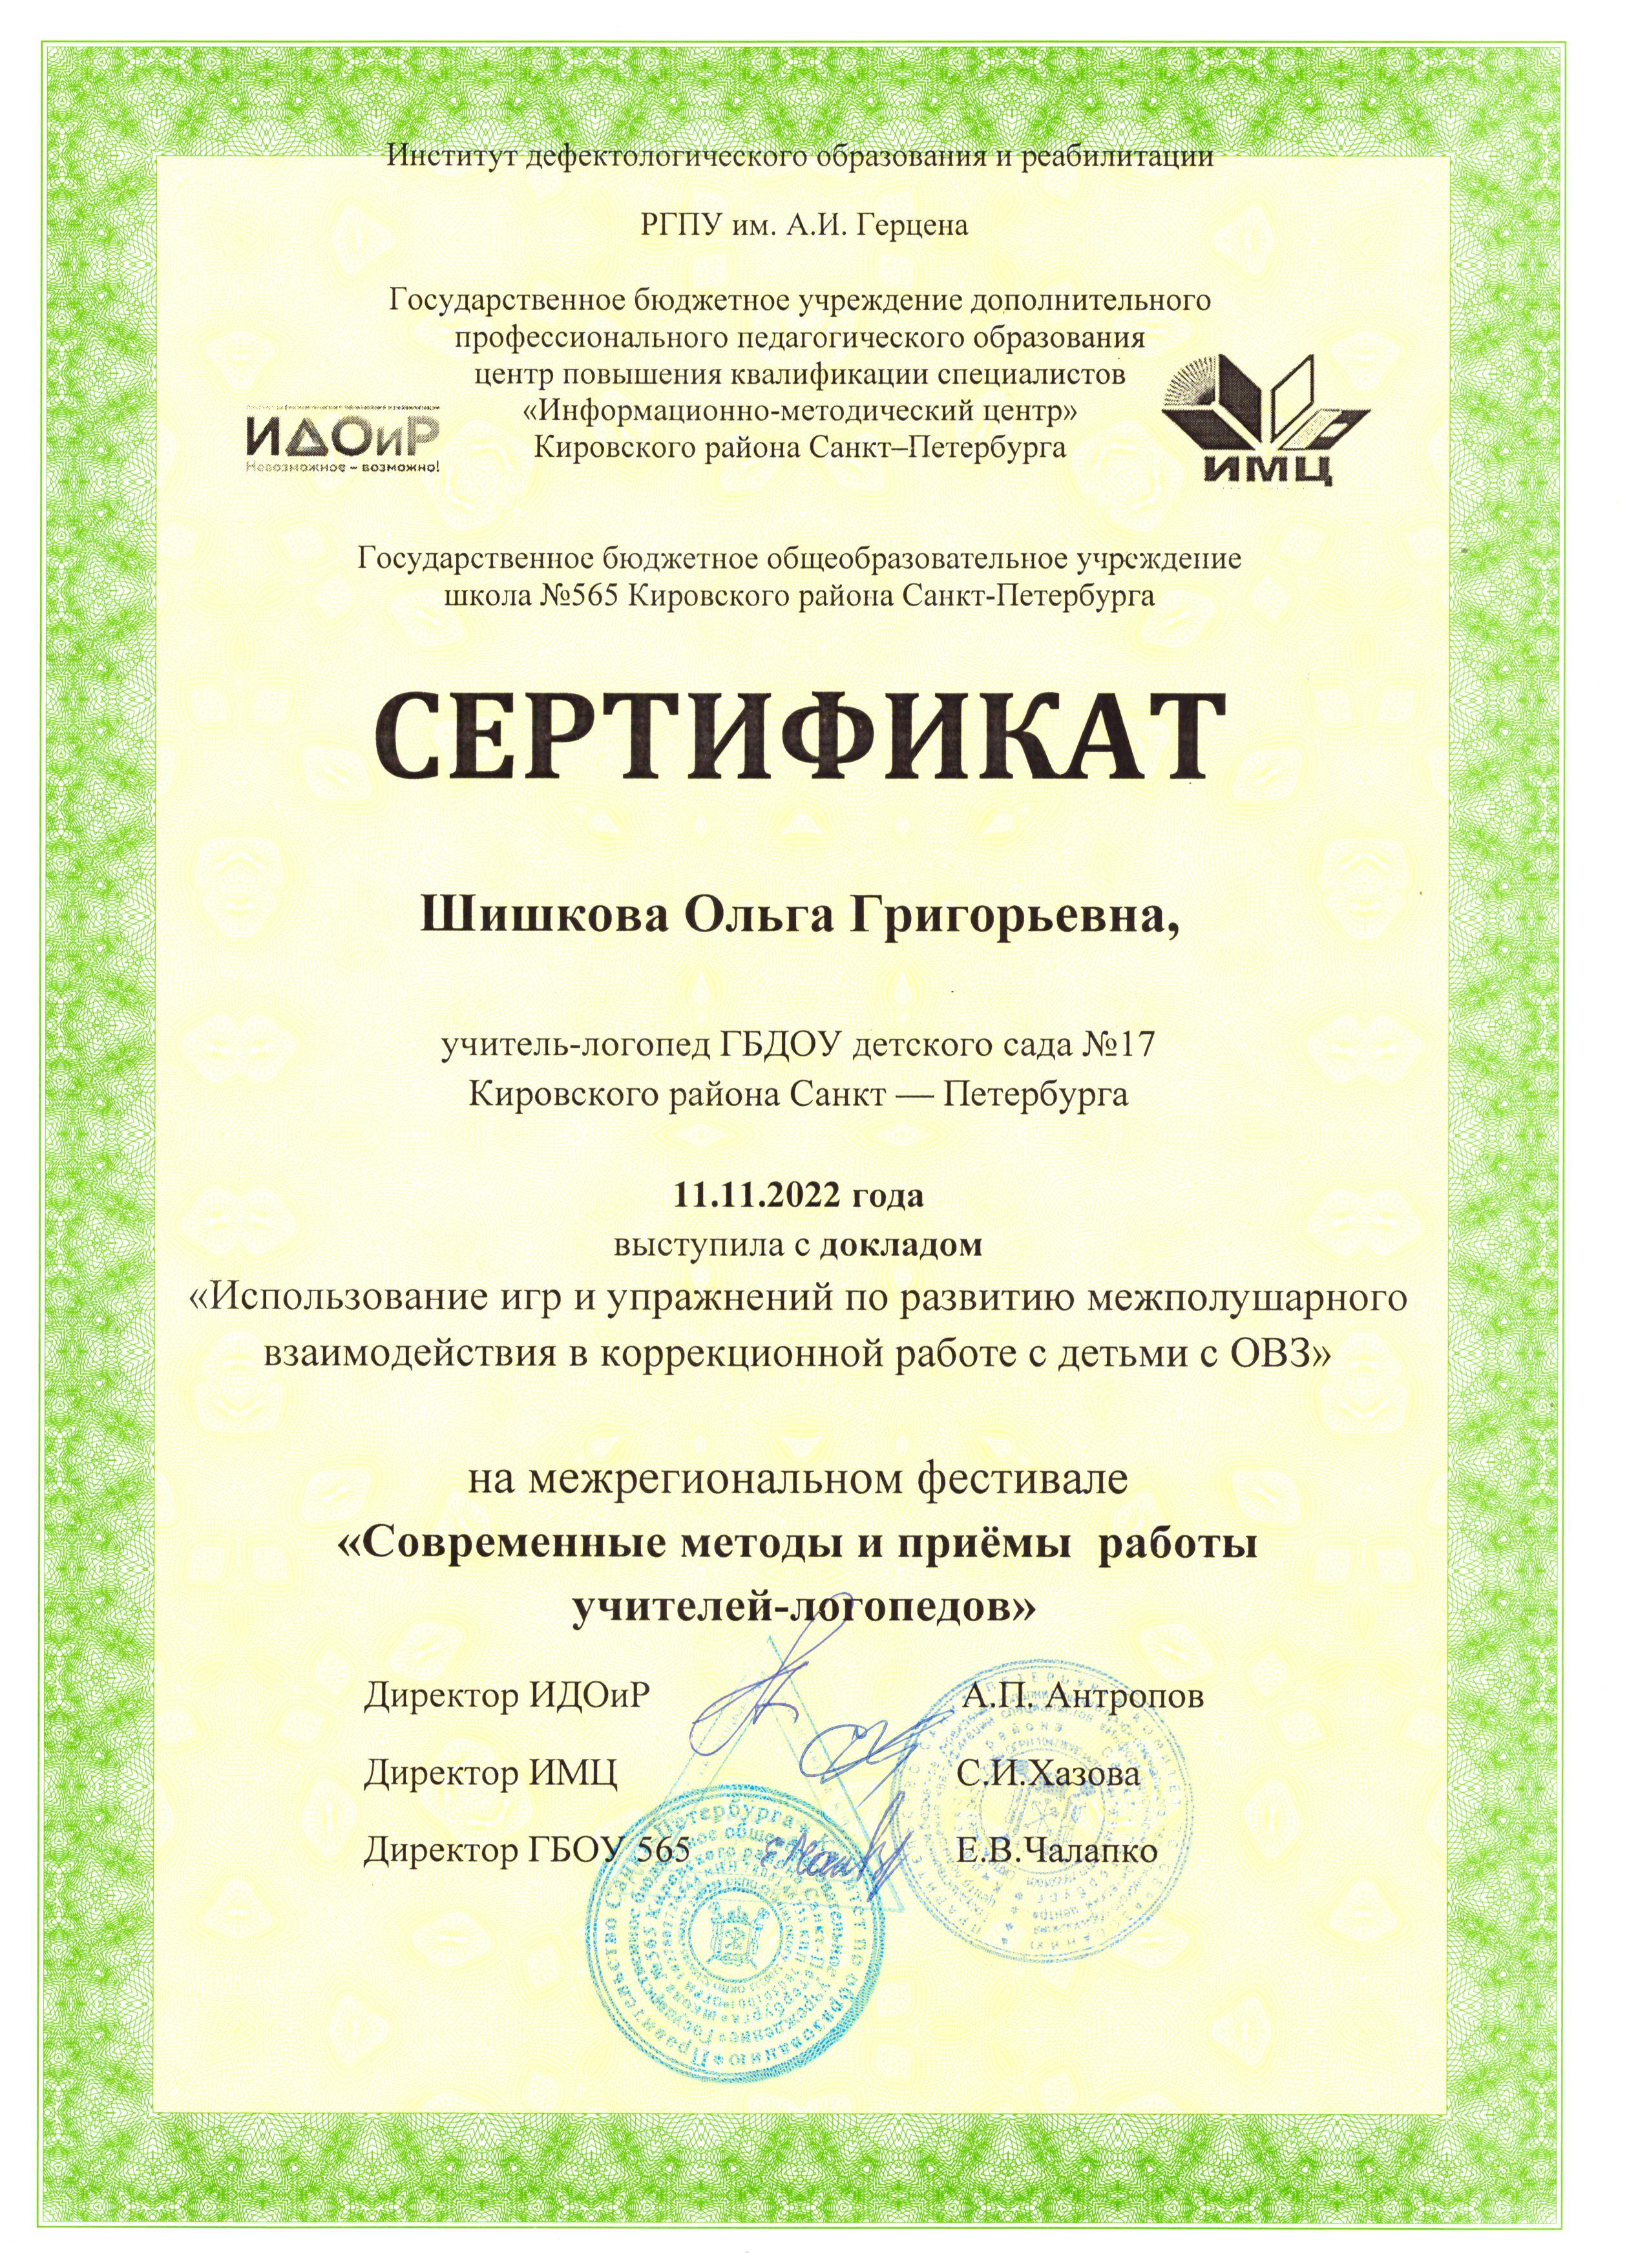 Сертификат Шишкова 001.jpg